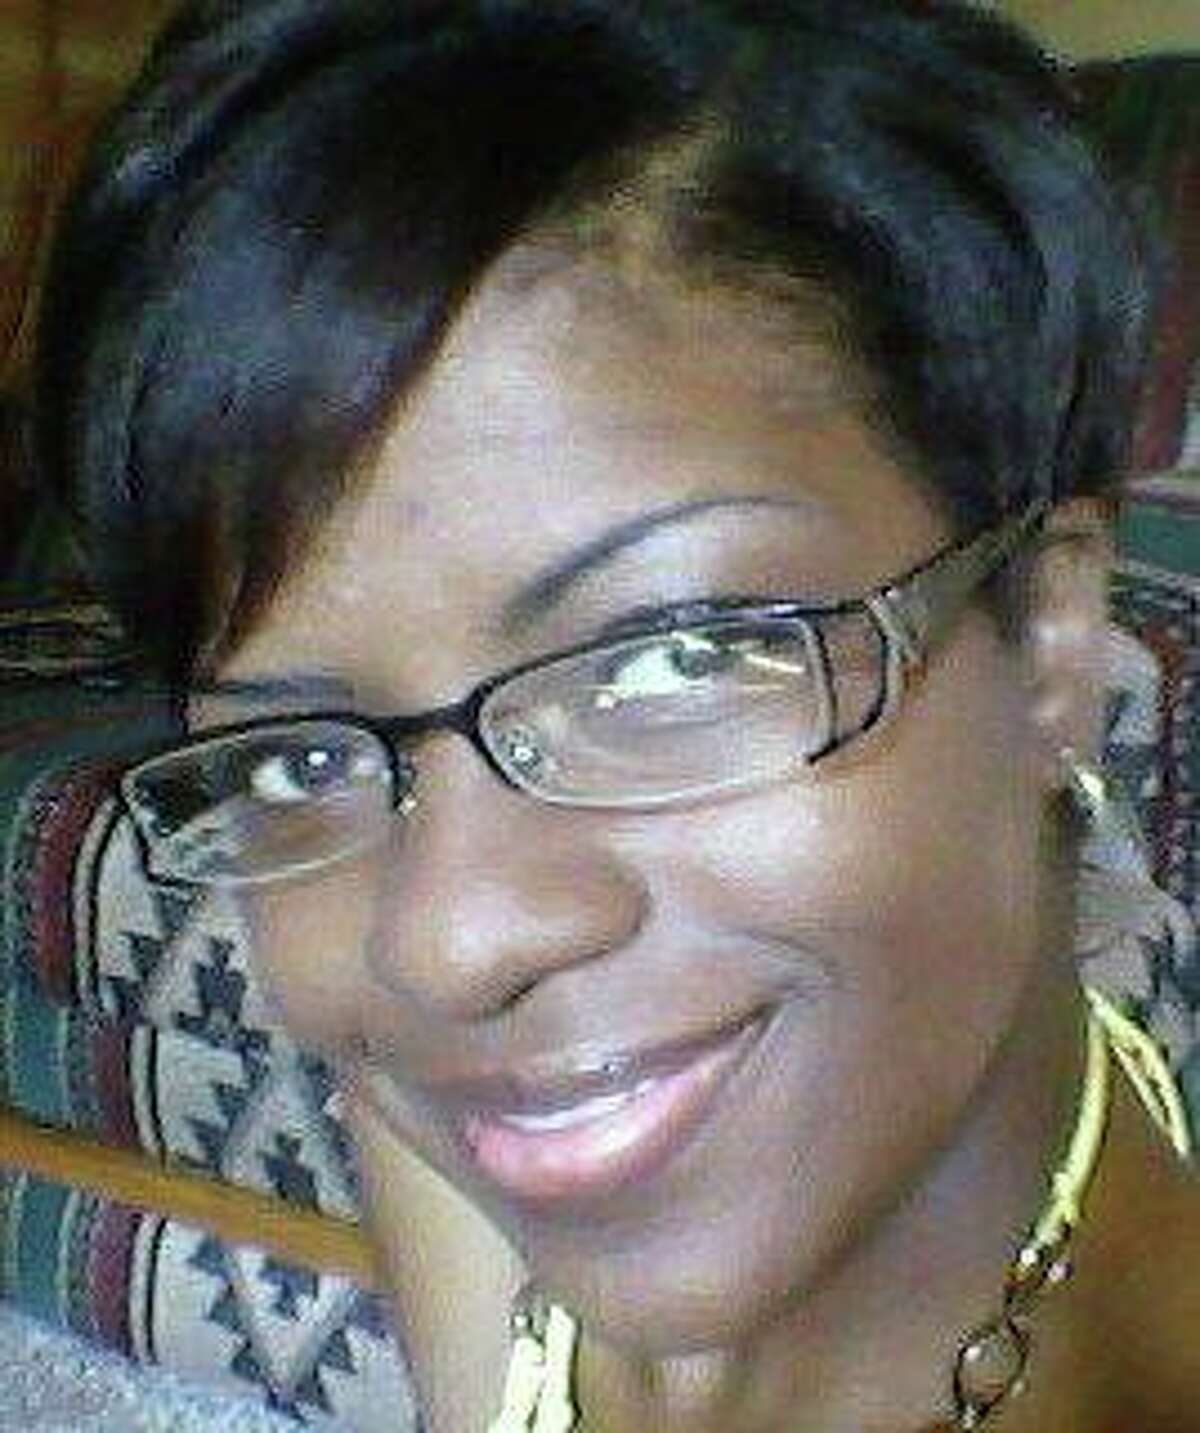 Kyna Warren, now 34, has been missing since September.